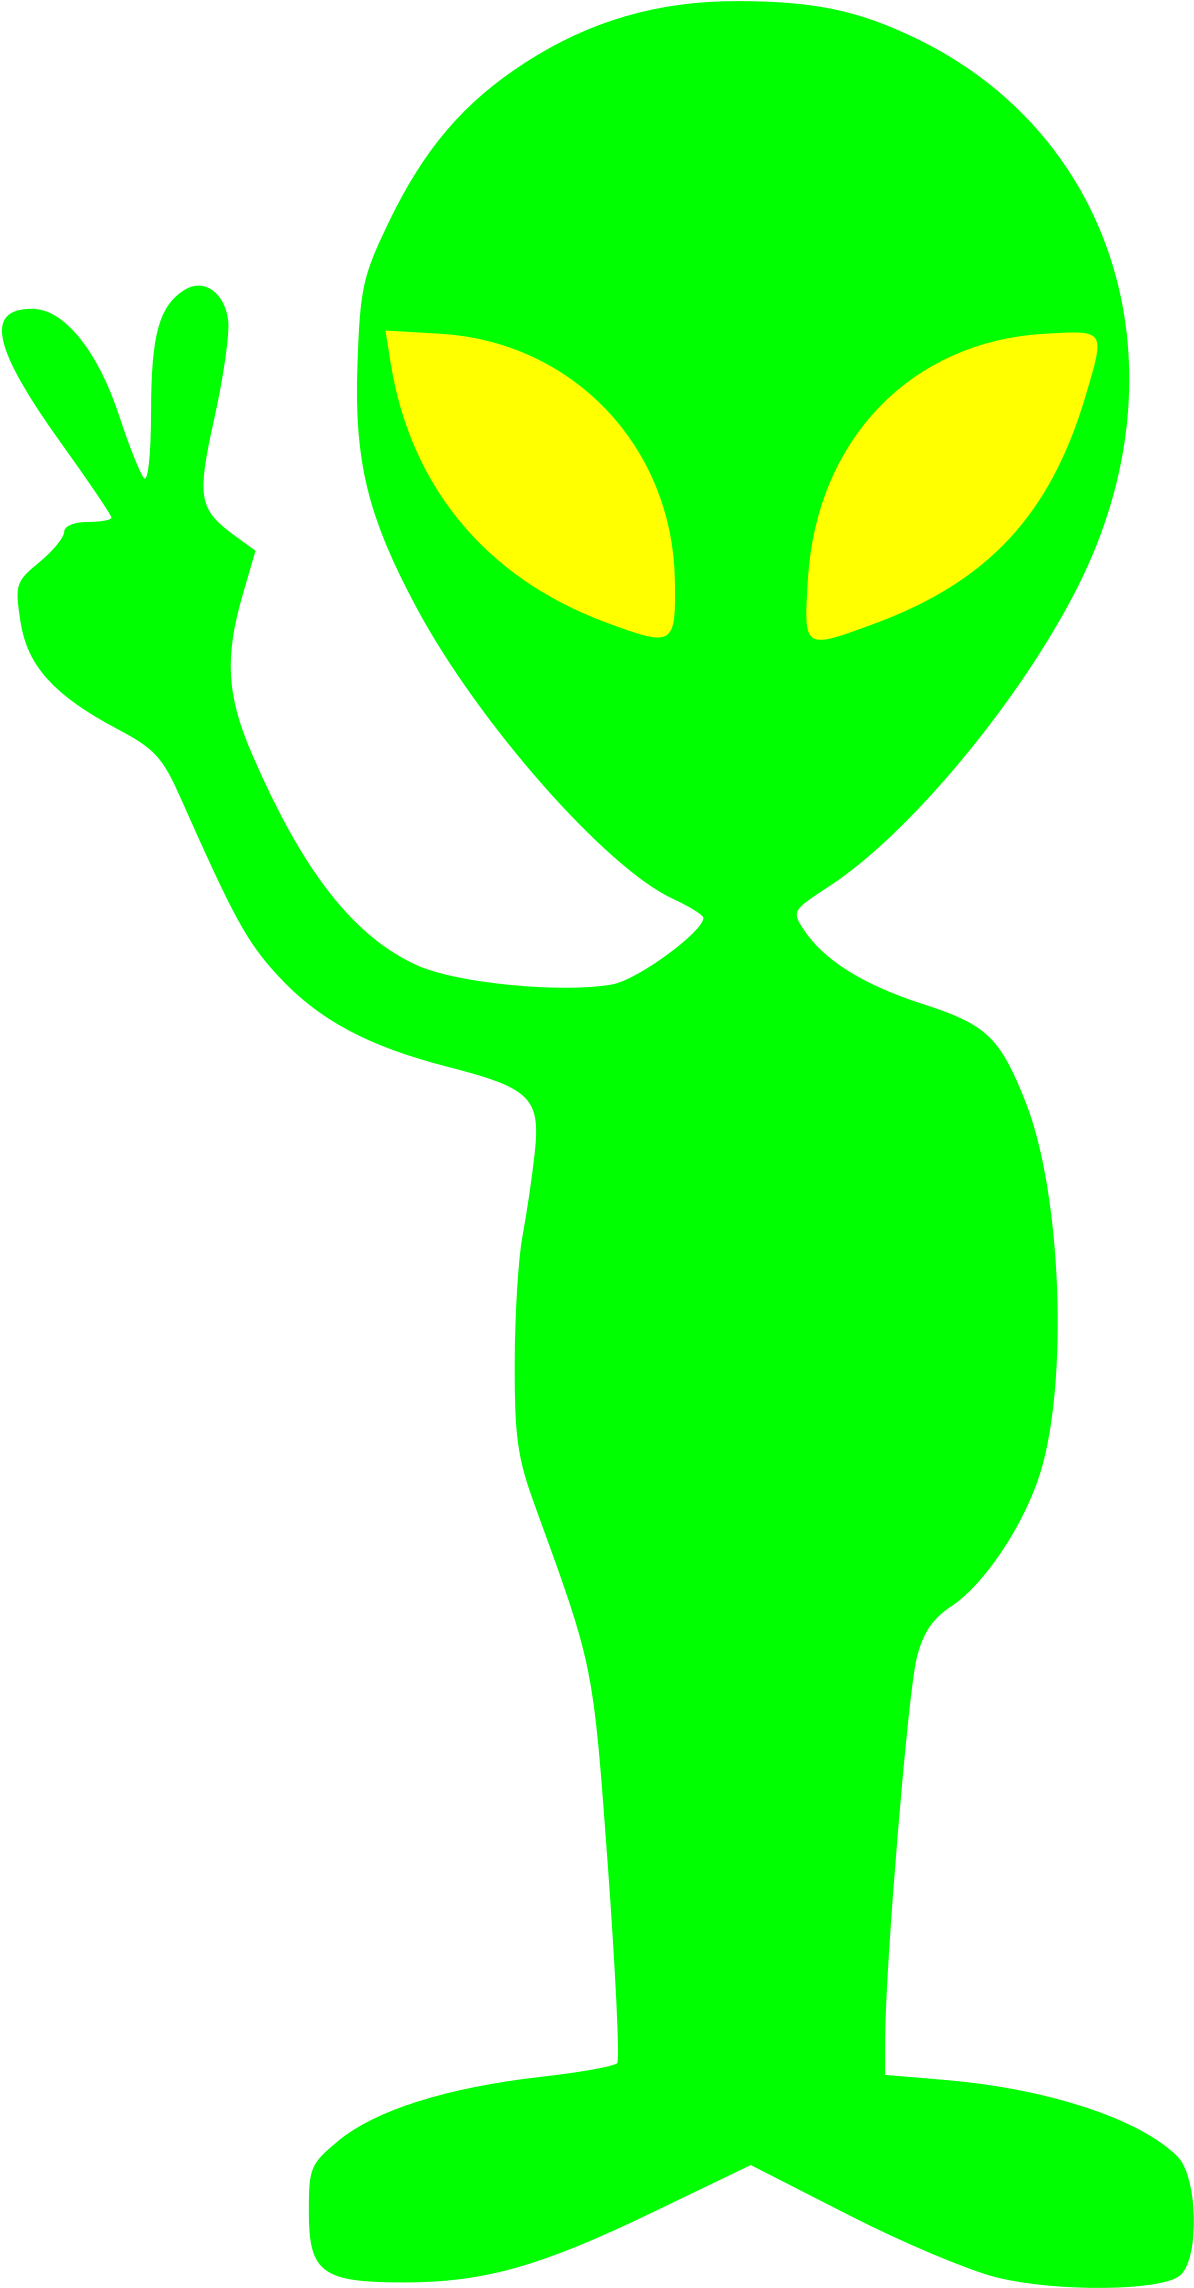 Big Image - Alien Doing Peace Sign (2013x2400)